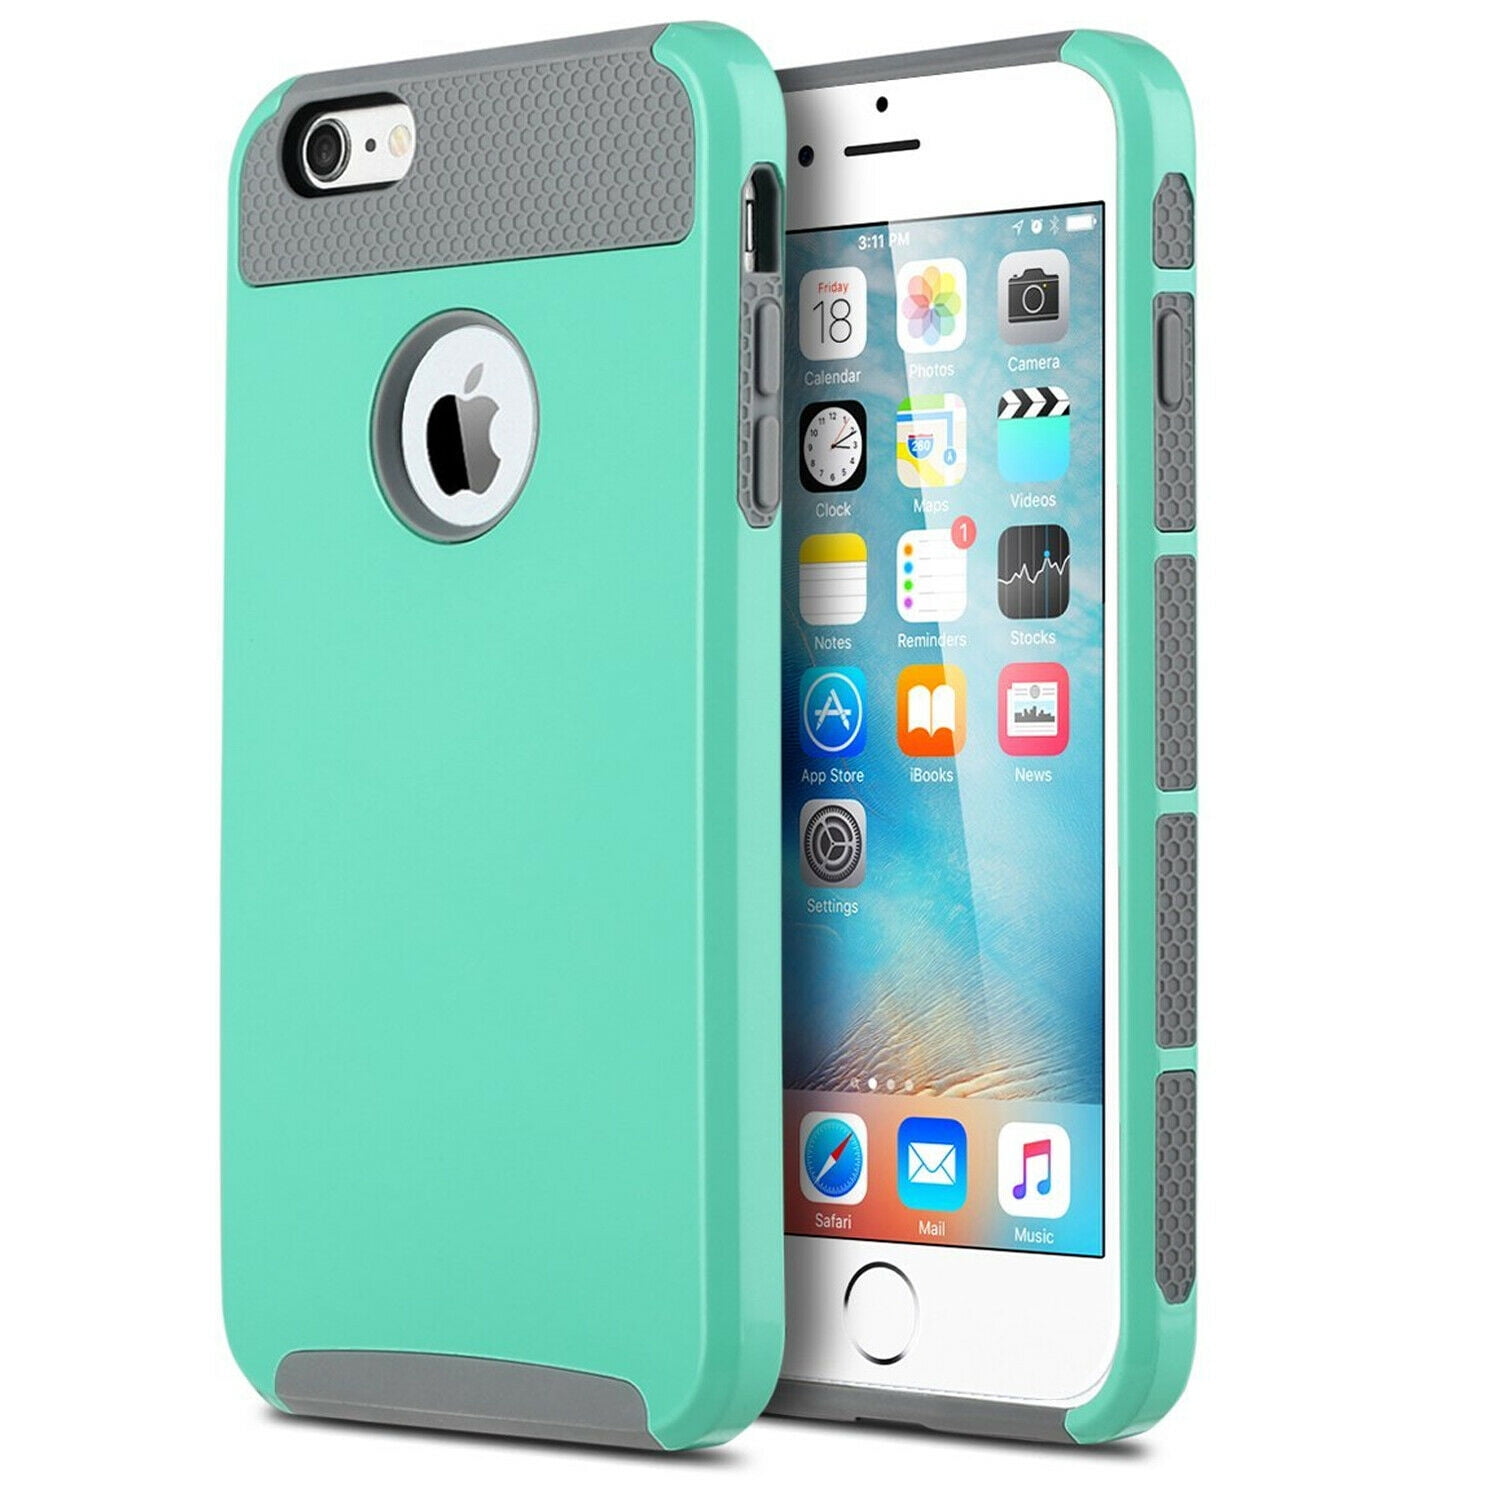 Case iPhone 6 Plus Phone Case, 2-Piece Style Hybrid Shockproof Hard Case